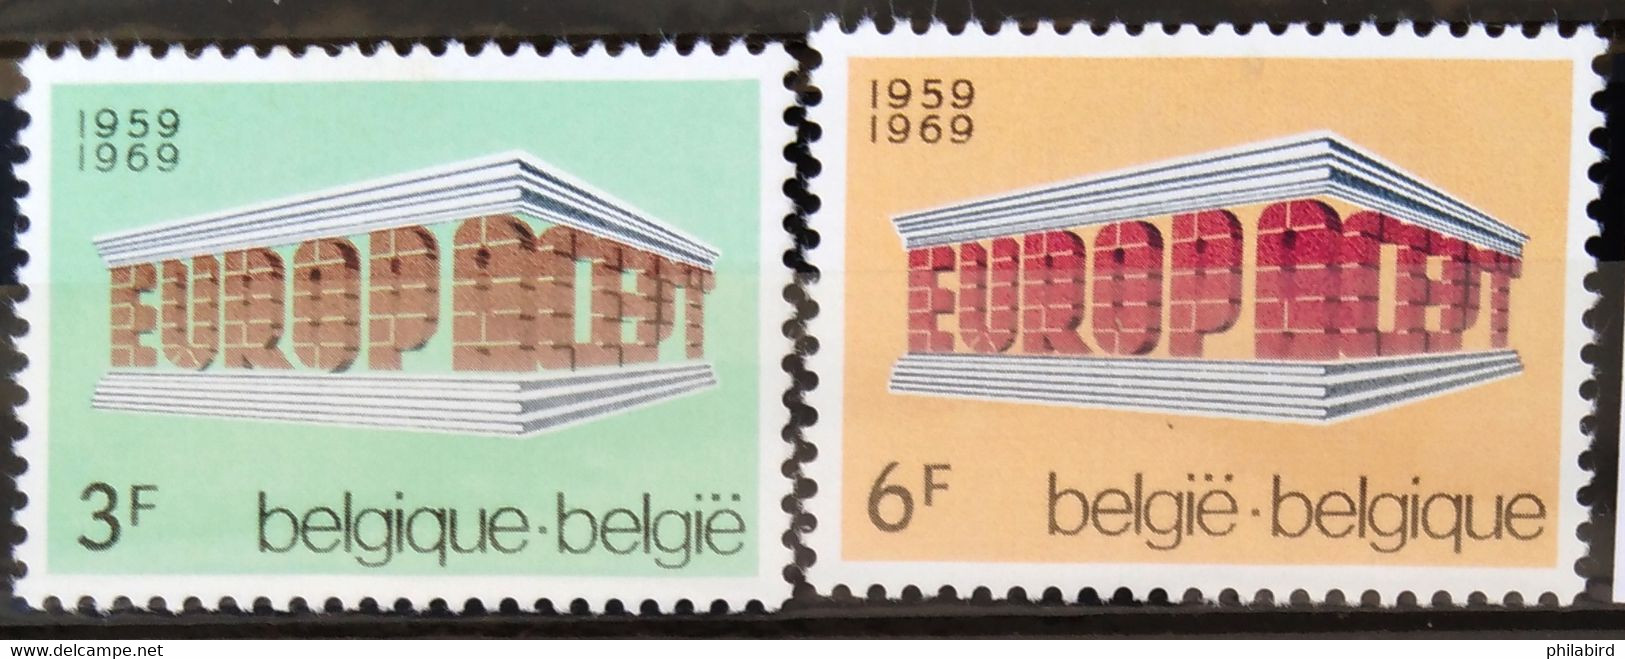 EUROPA 1969 - BELGIQUE                  N° 1489/1490                     NEUF* - 1969